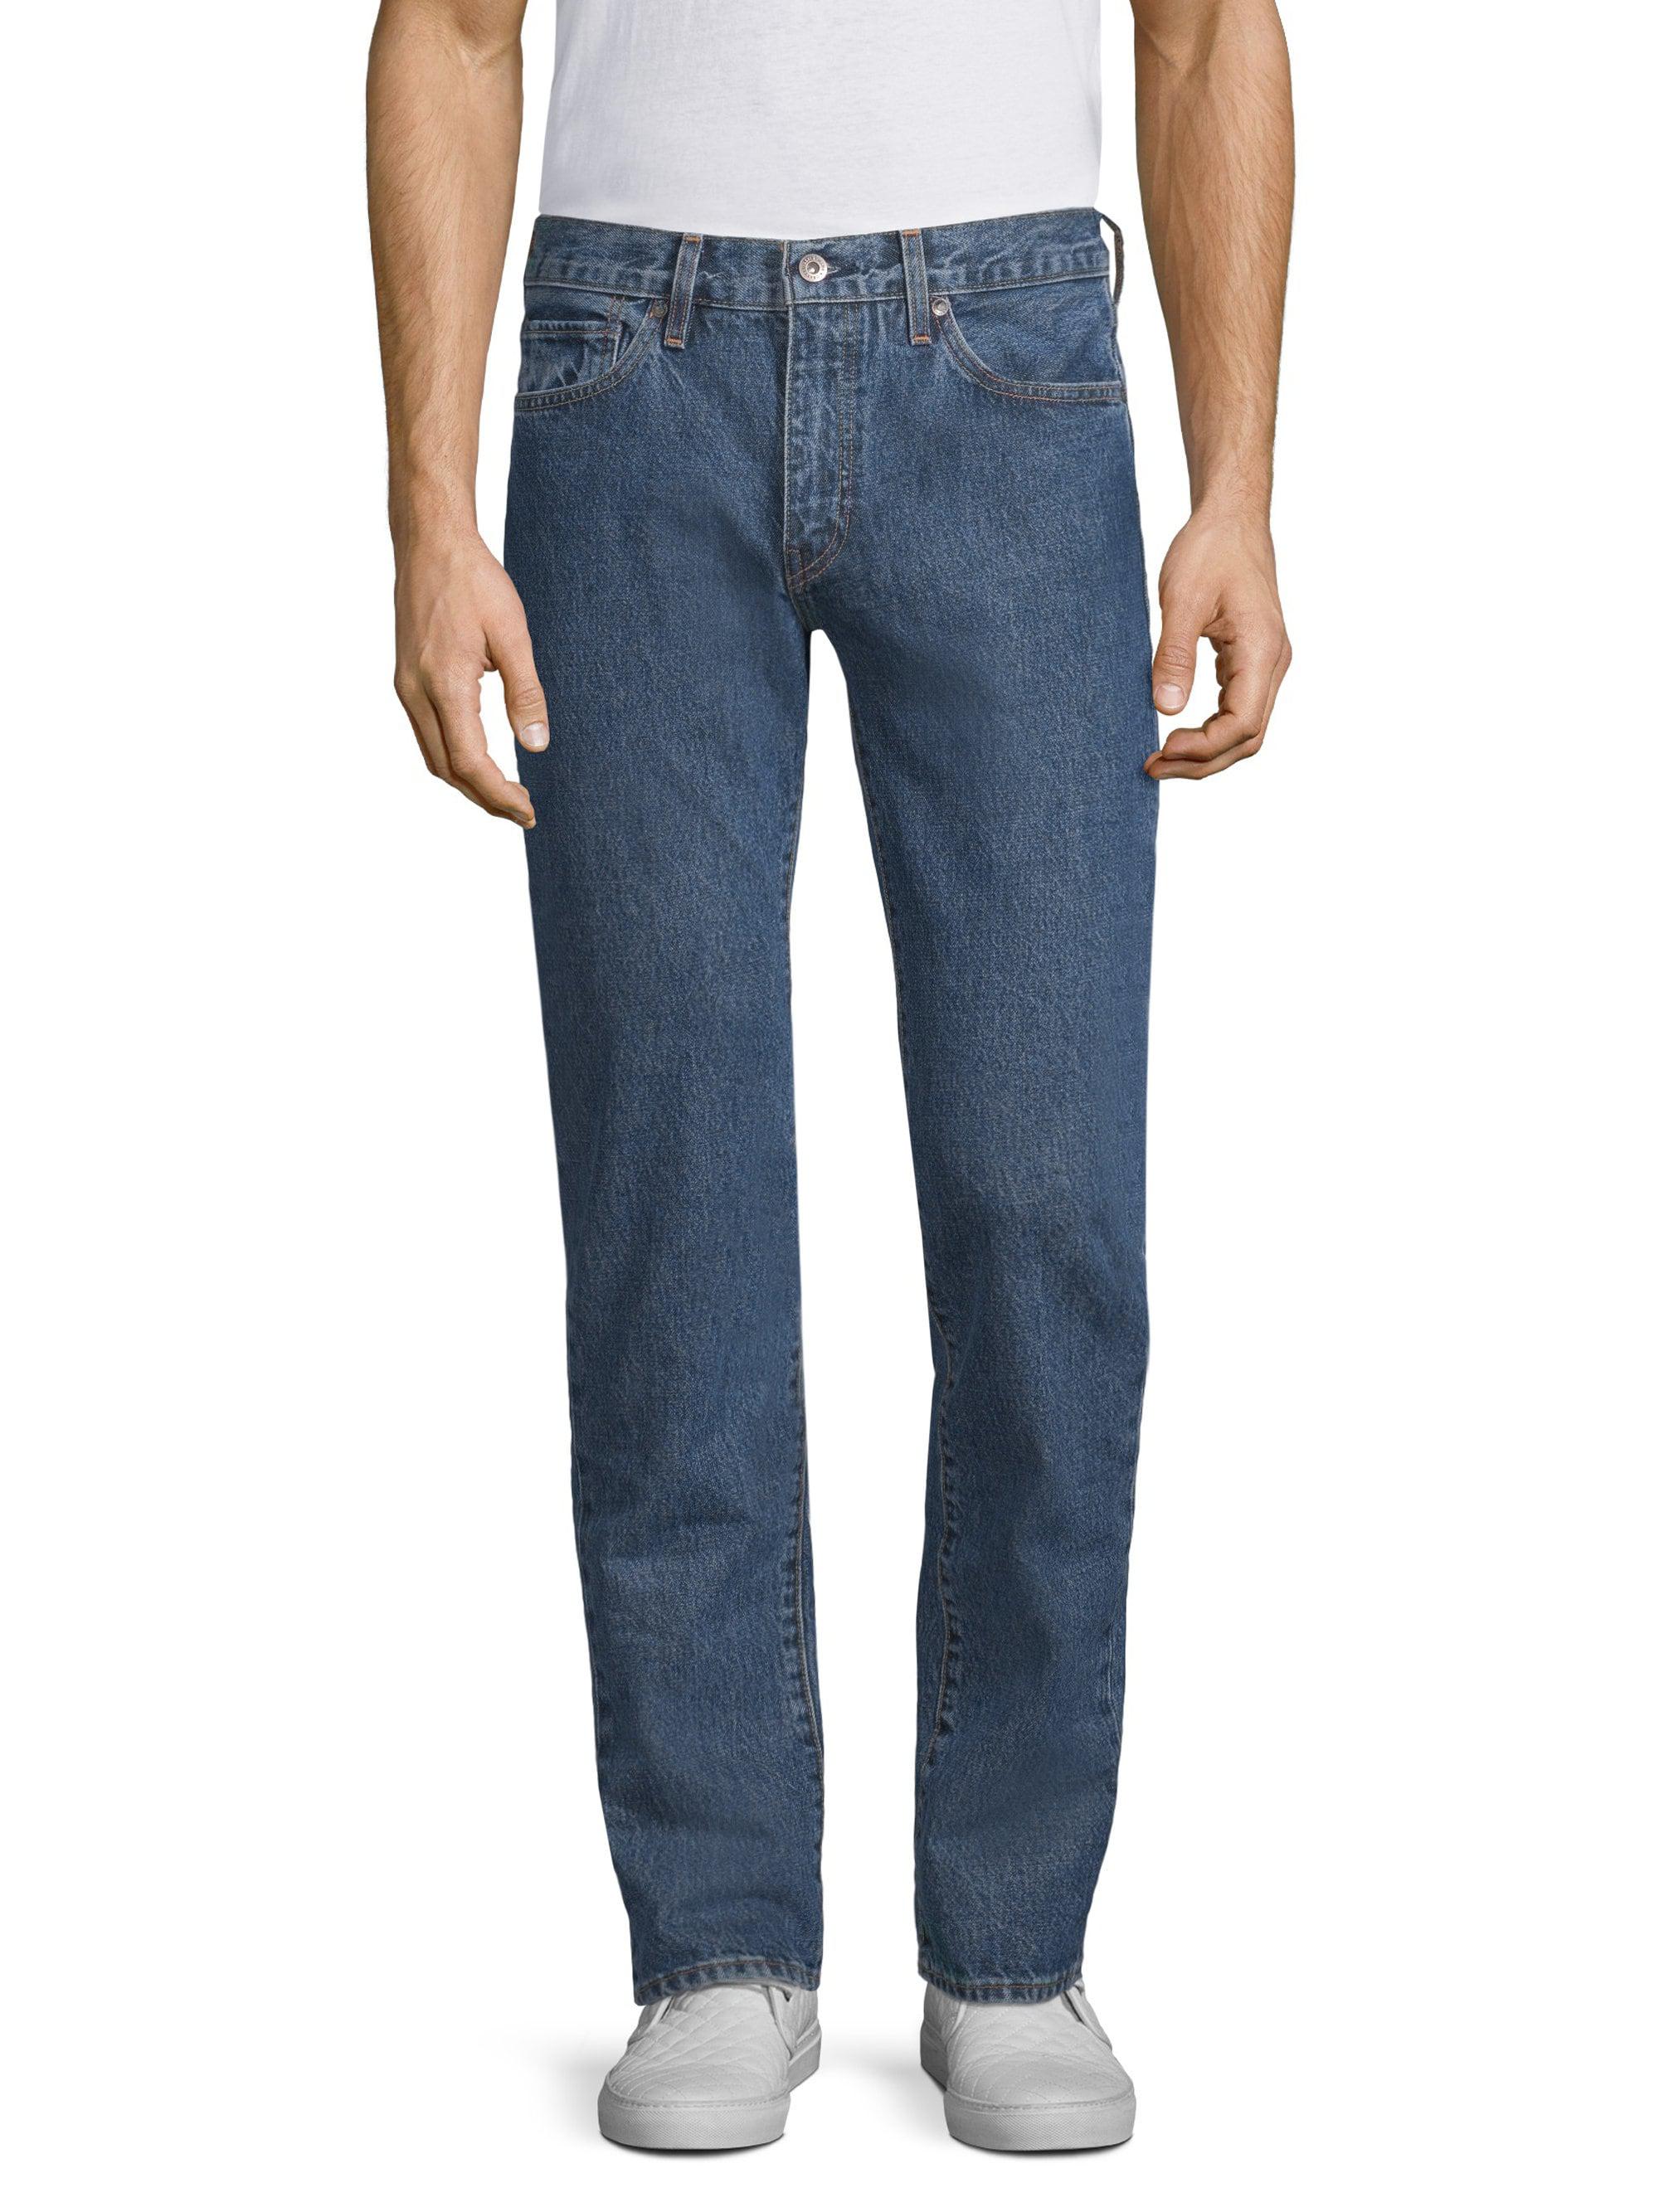 Levi's 511 Slim-fit Stonewash Jeans in Blue for Men - Lyst